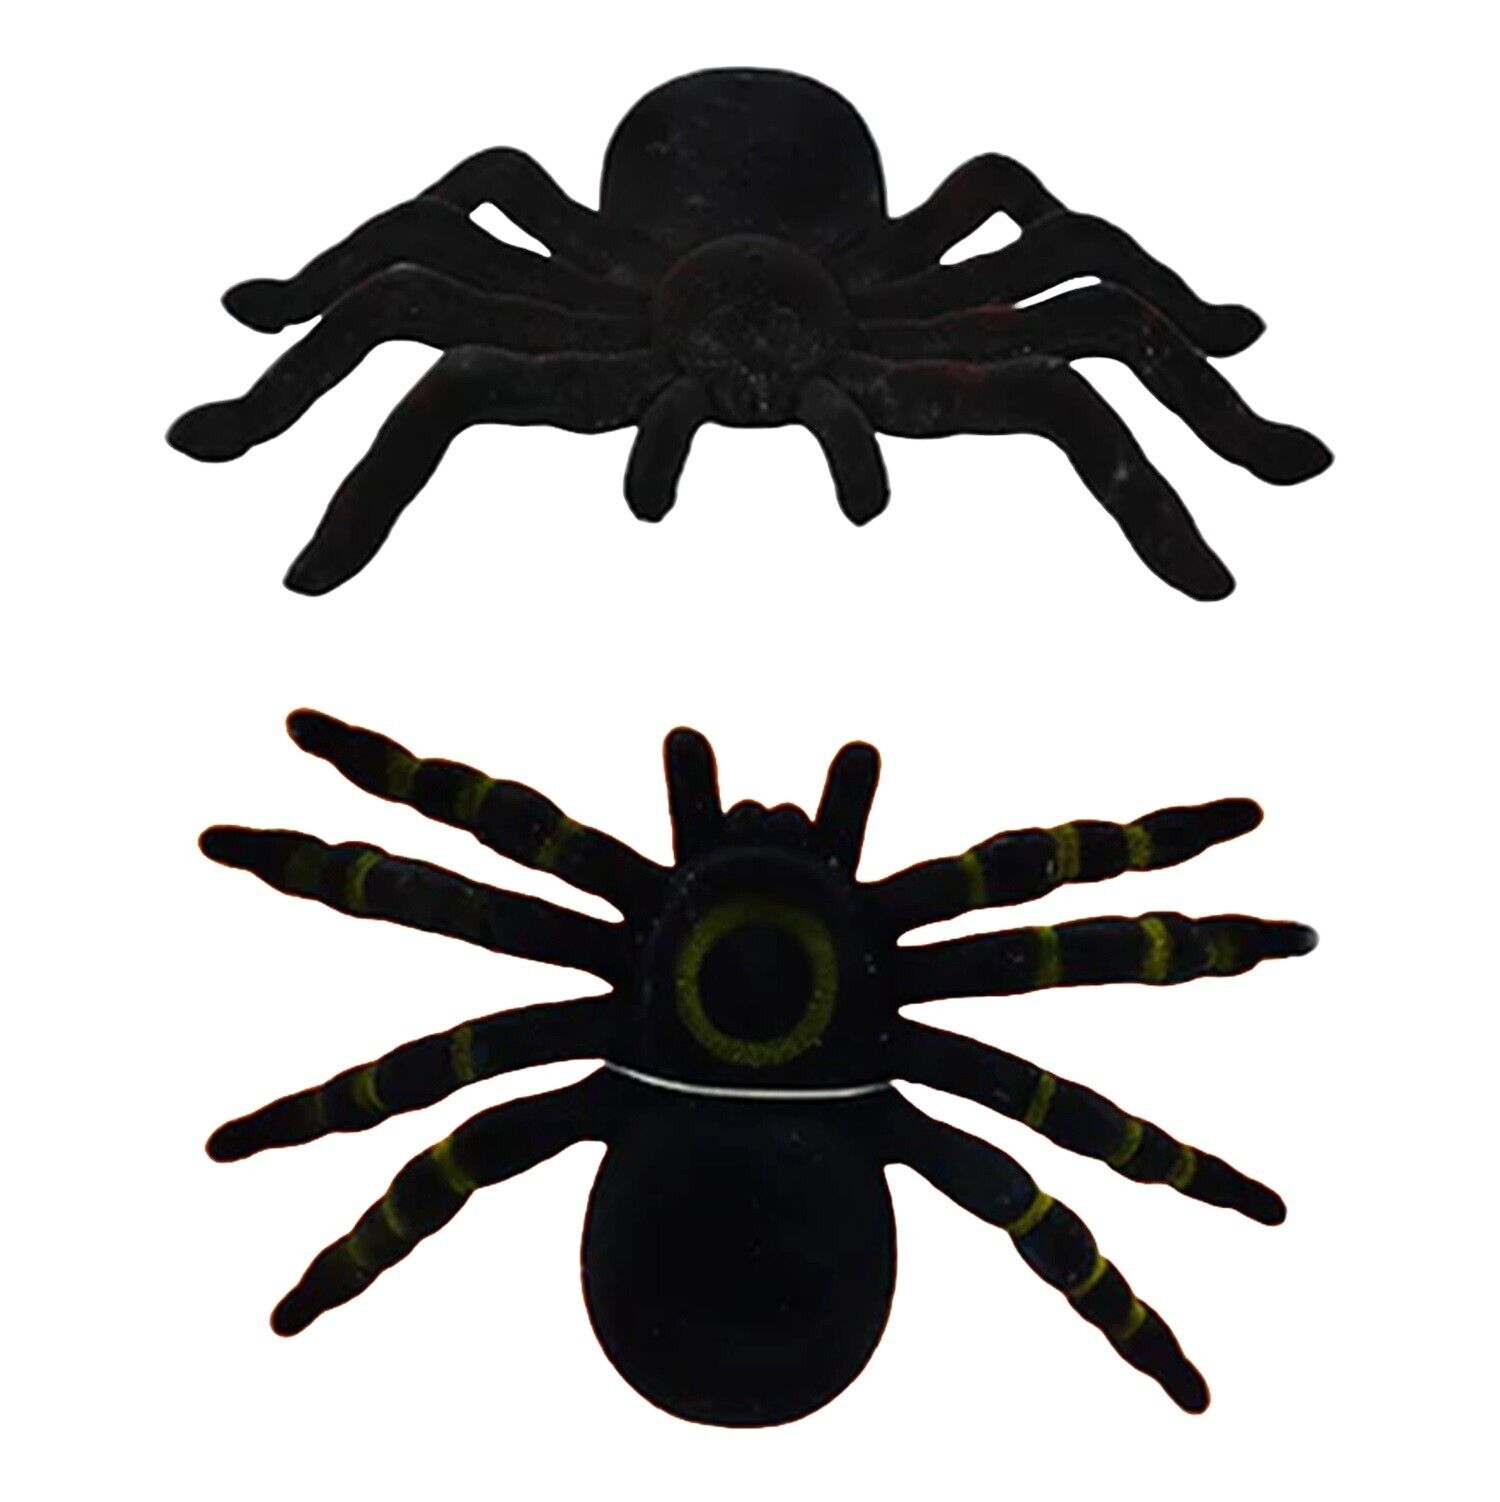 2pc-HUGE Gothic Fuzzy Glitter BLACK JUMBO SPIDERS Figure Model Crafts Decoration